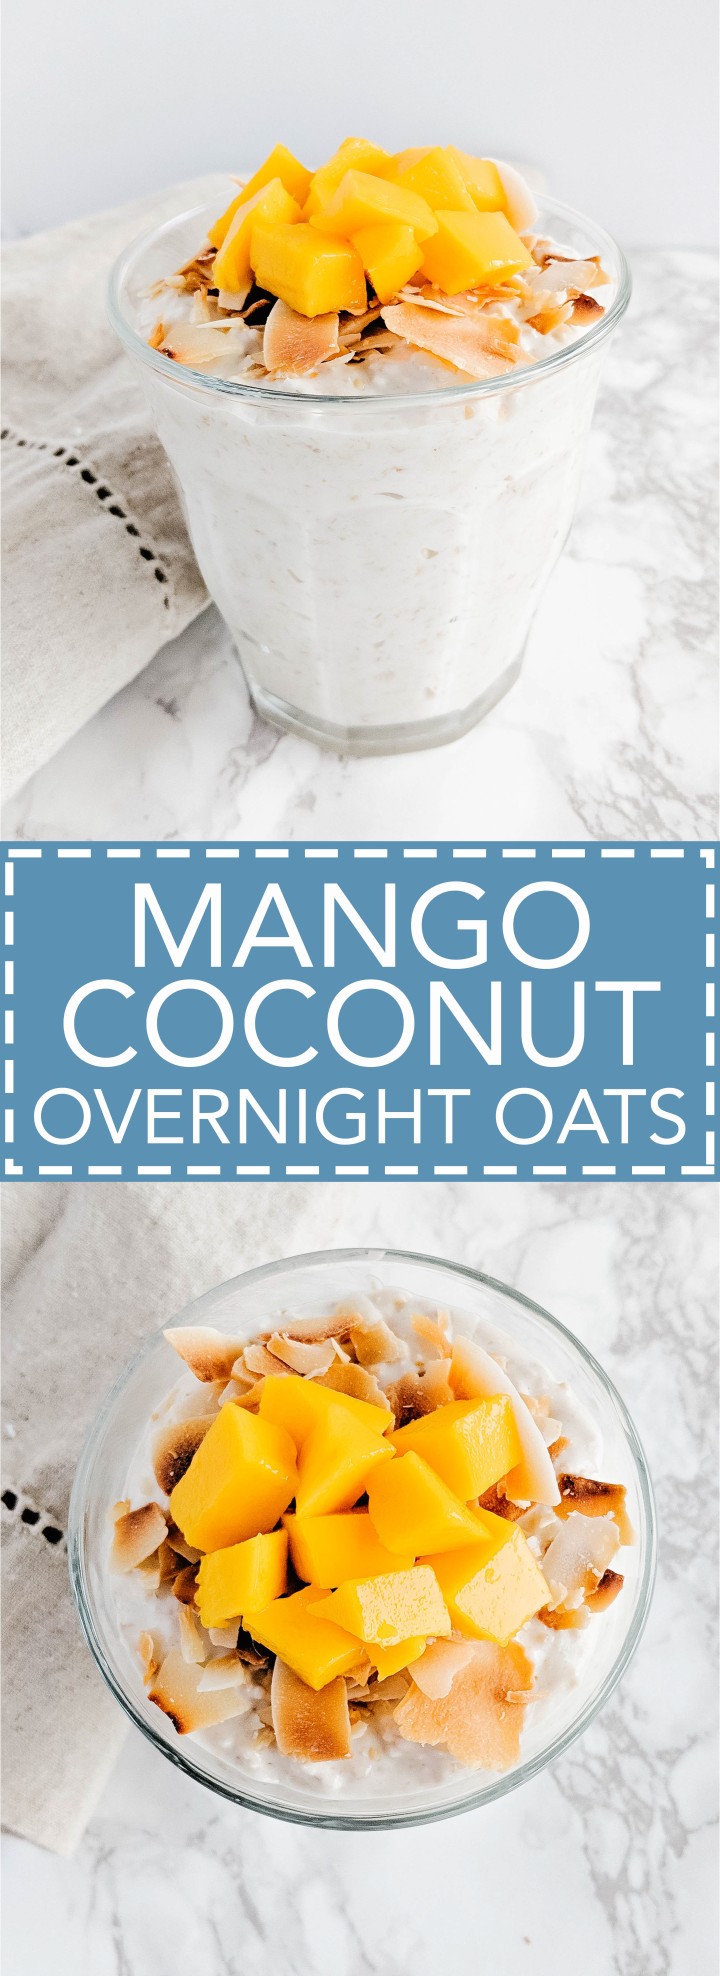 Healthy Mango Coconut Overnight Oats - Yum!